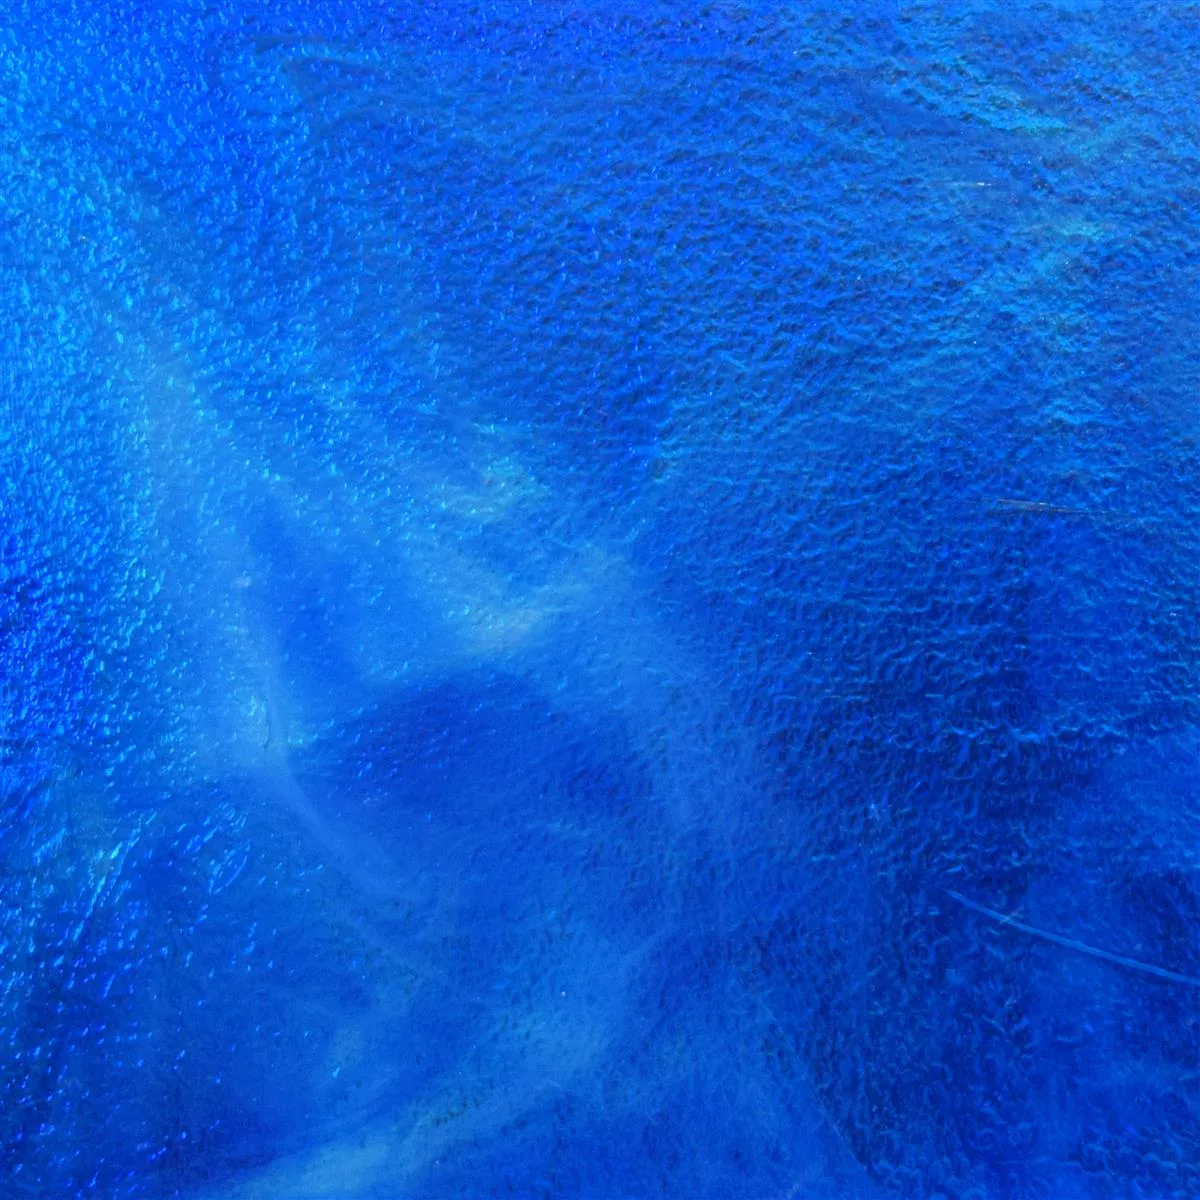 Lasi Seinä Tiilet Trend-Vi Supreme Maritime Blue 30x60cm